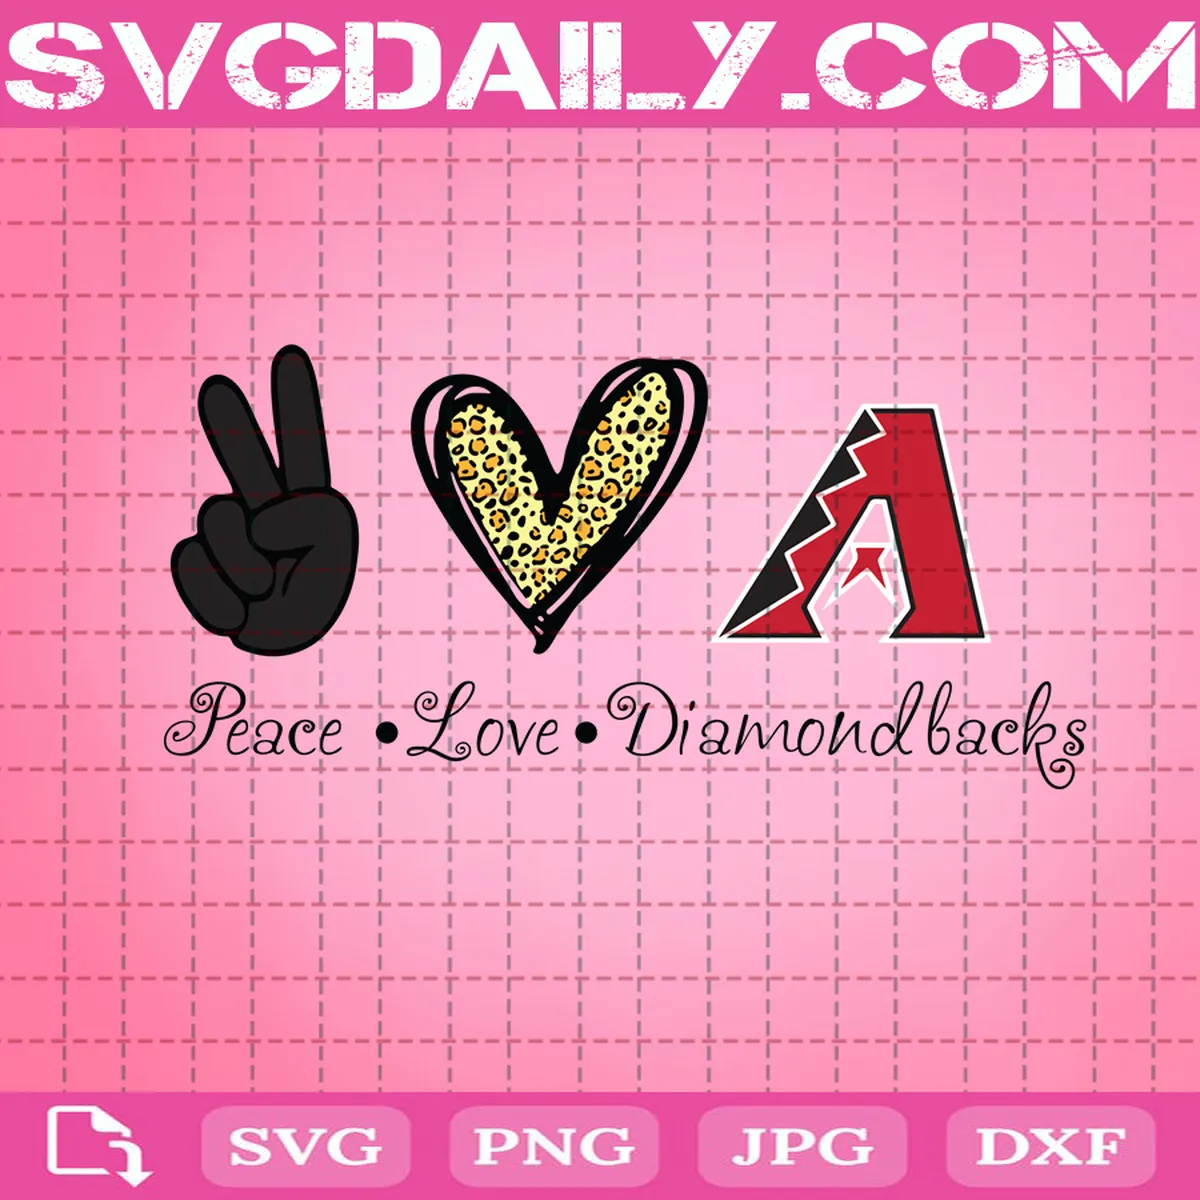 Peace Love Arizona Diamondbacks Svg, Diamondbacks Svg, Arizona Diamondbacks Svg, Sport Svg, MLB Svg, Peace Love Baseball Svg